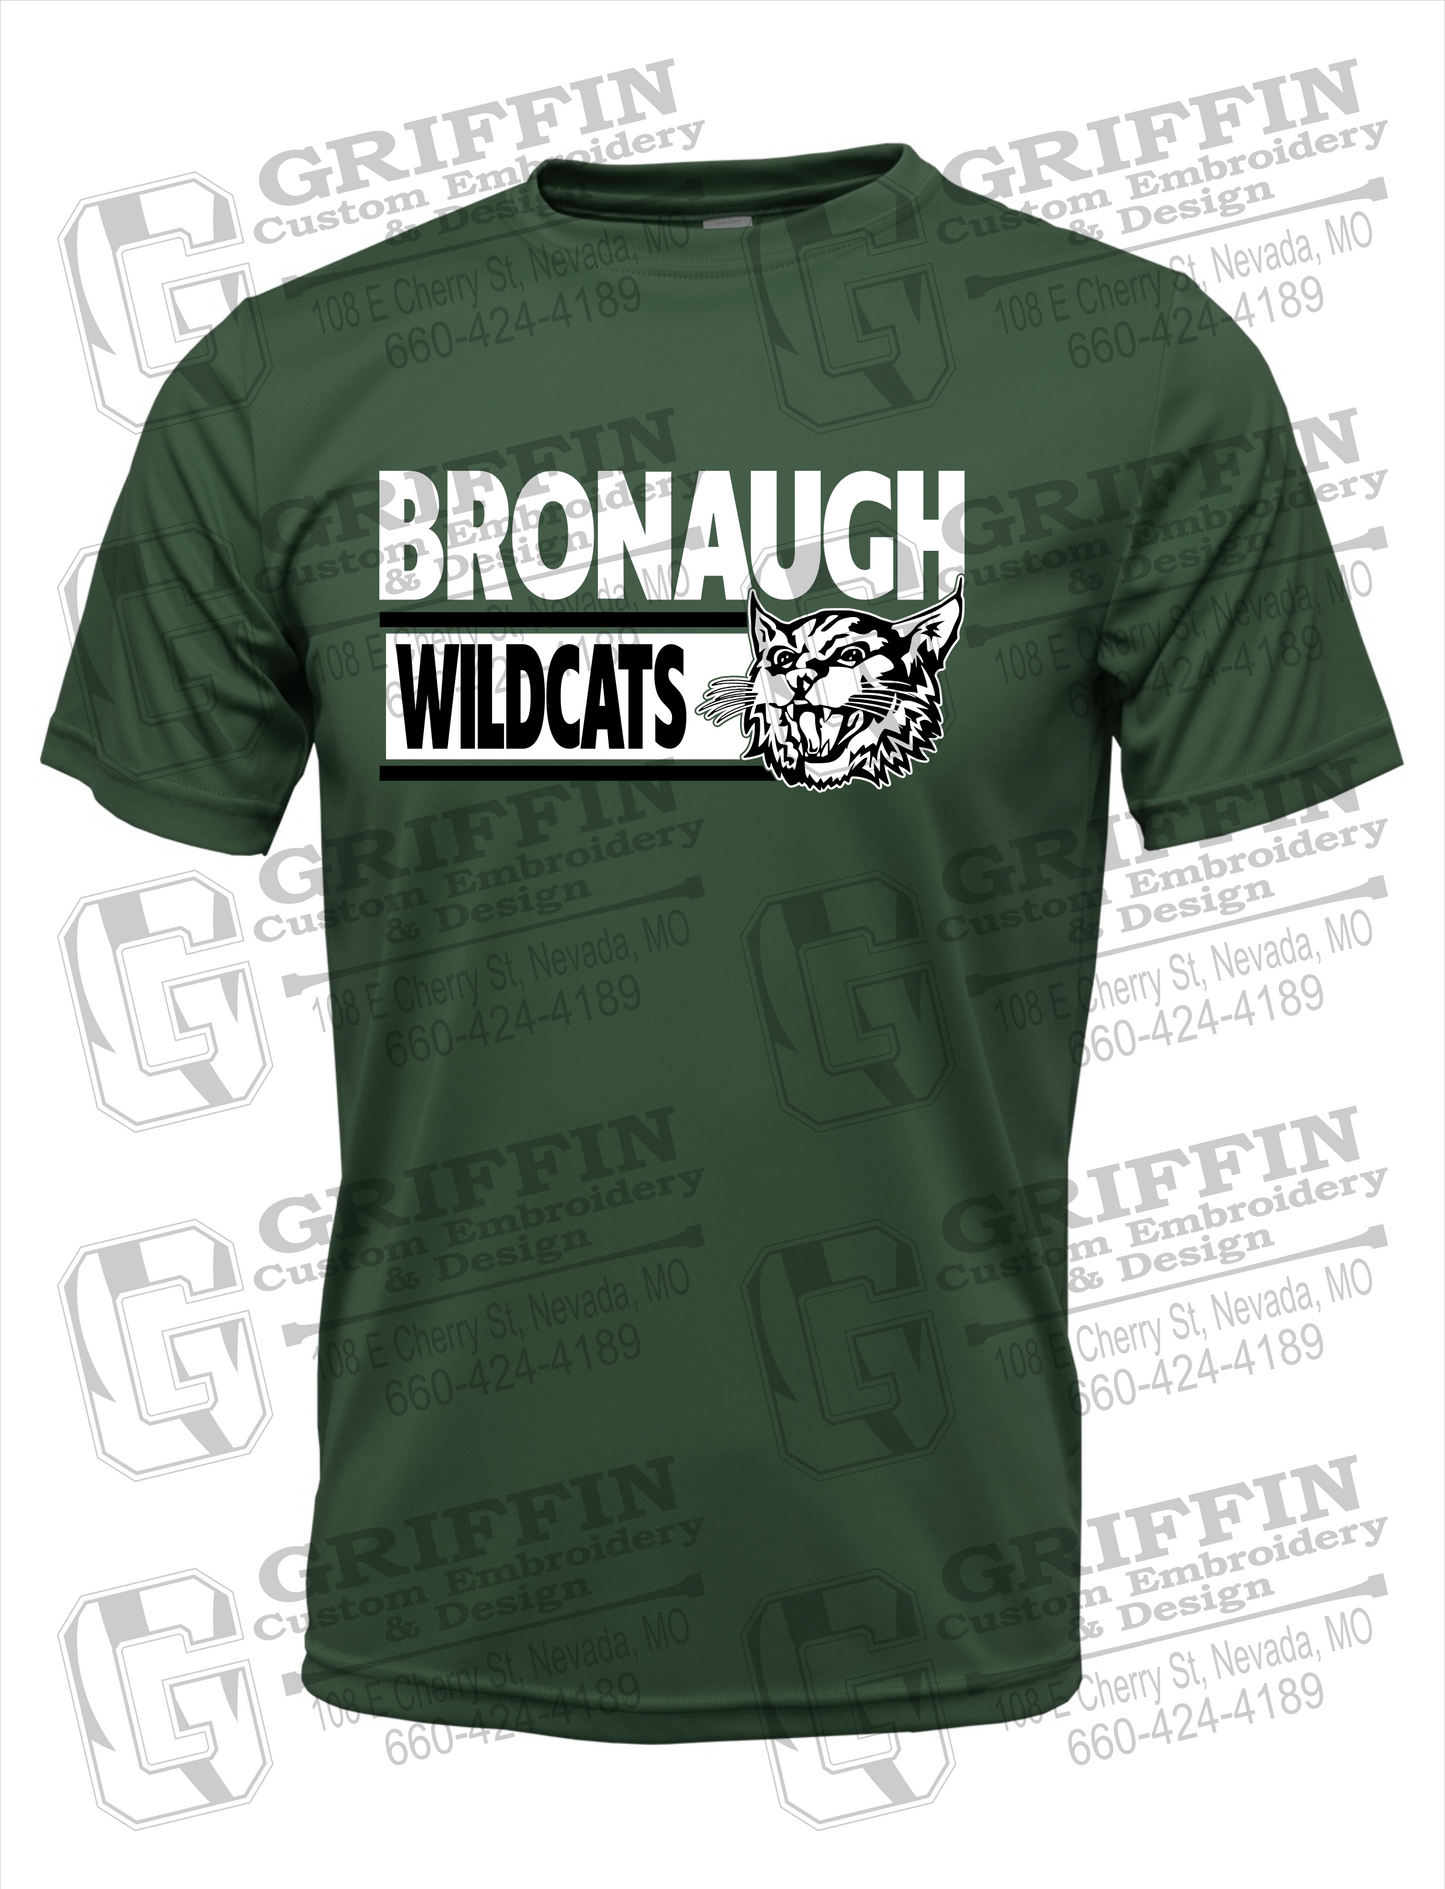 Bronaugh Wildcats 24-B Dry-Fit T-Shirt